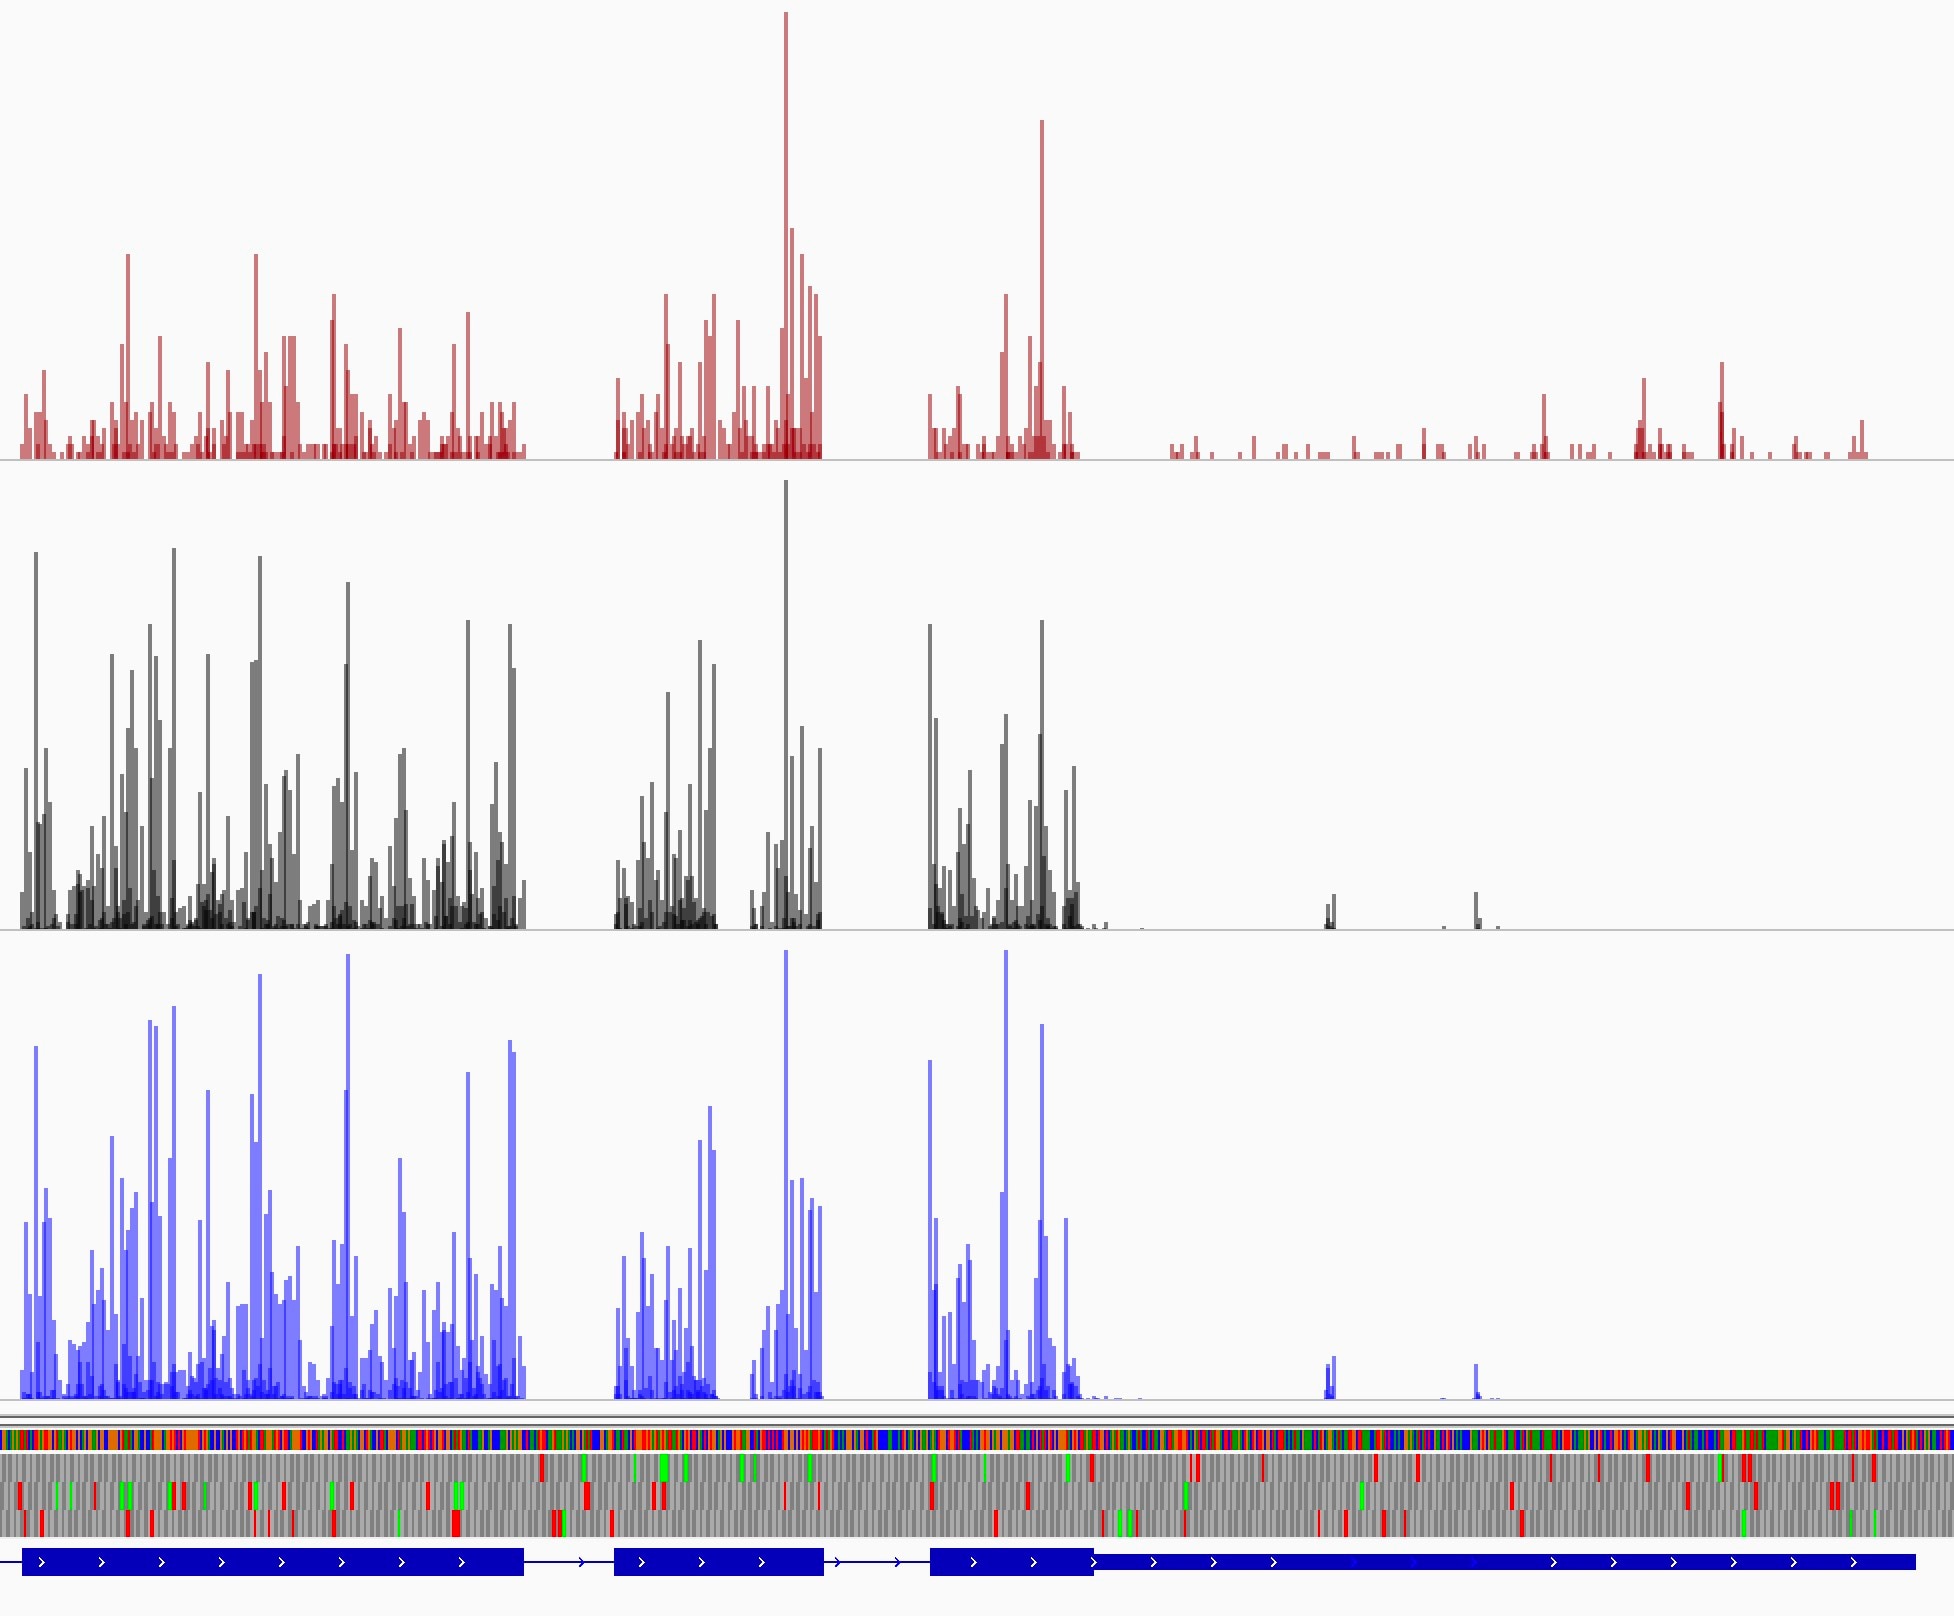 3 charts of ribosome profiling data.